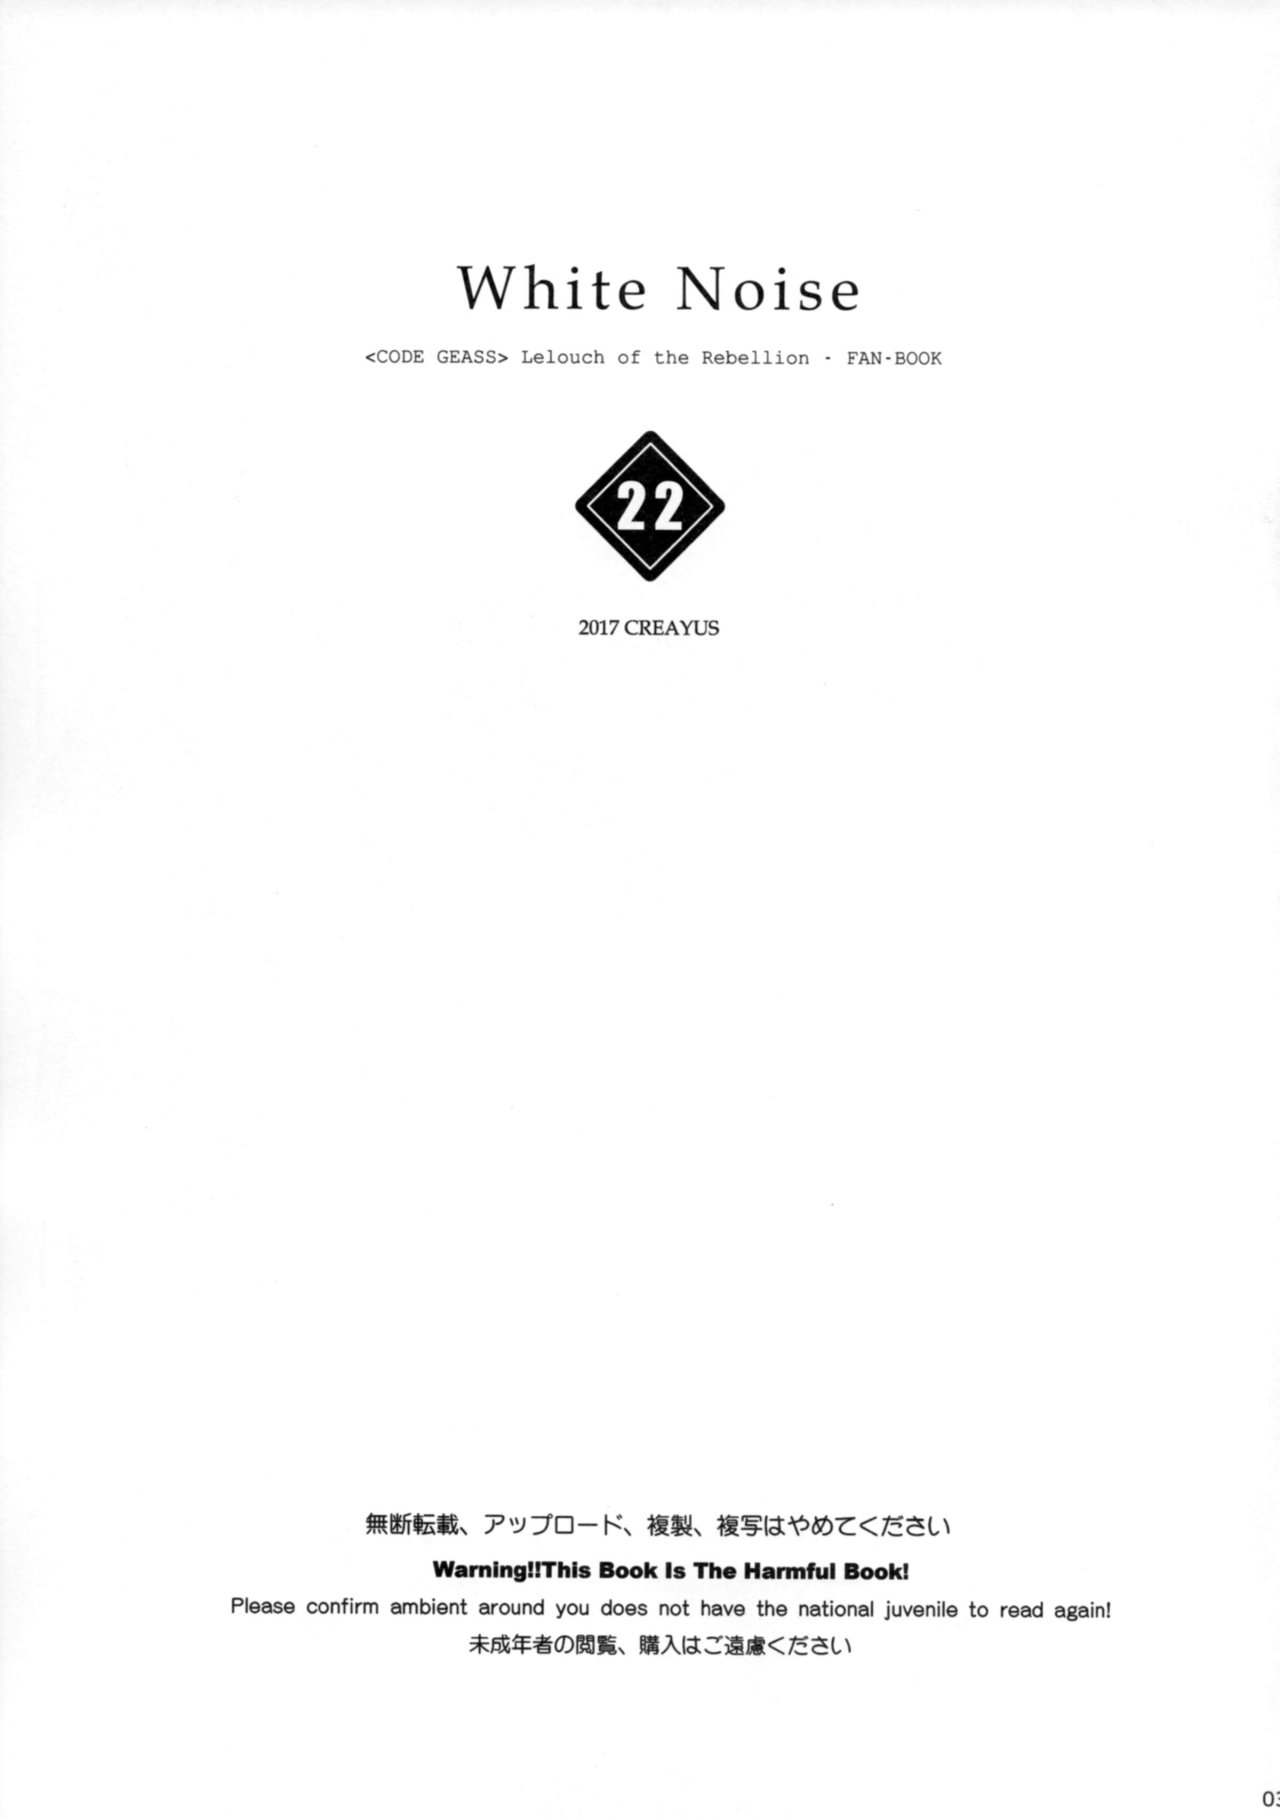 White Noise (CODE GEASS) - 1